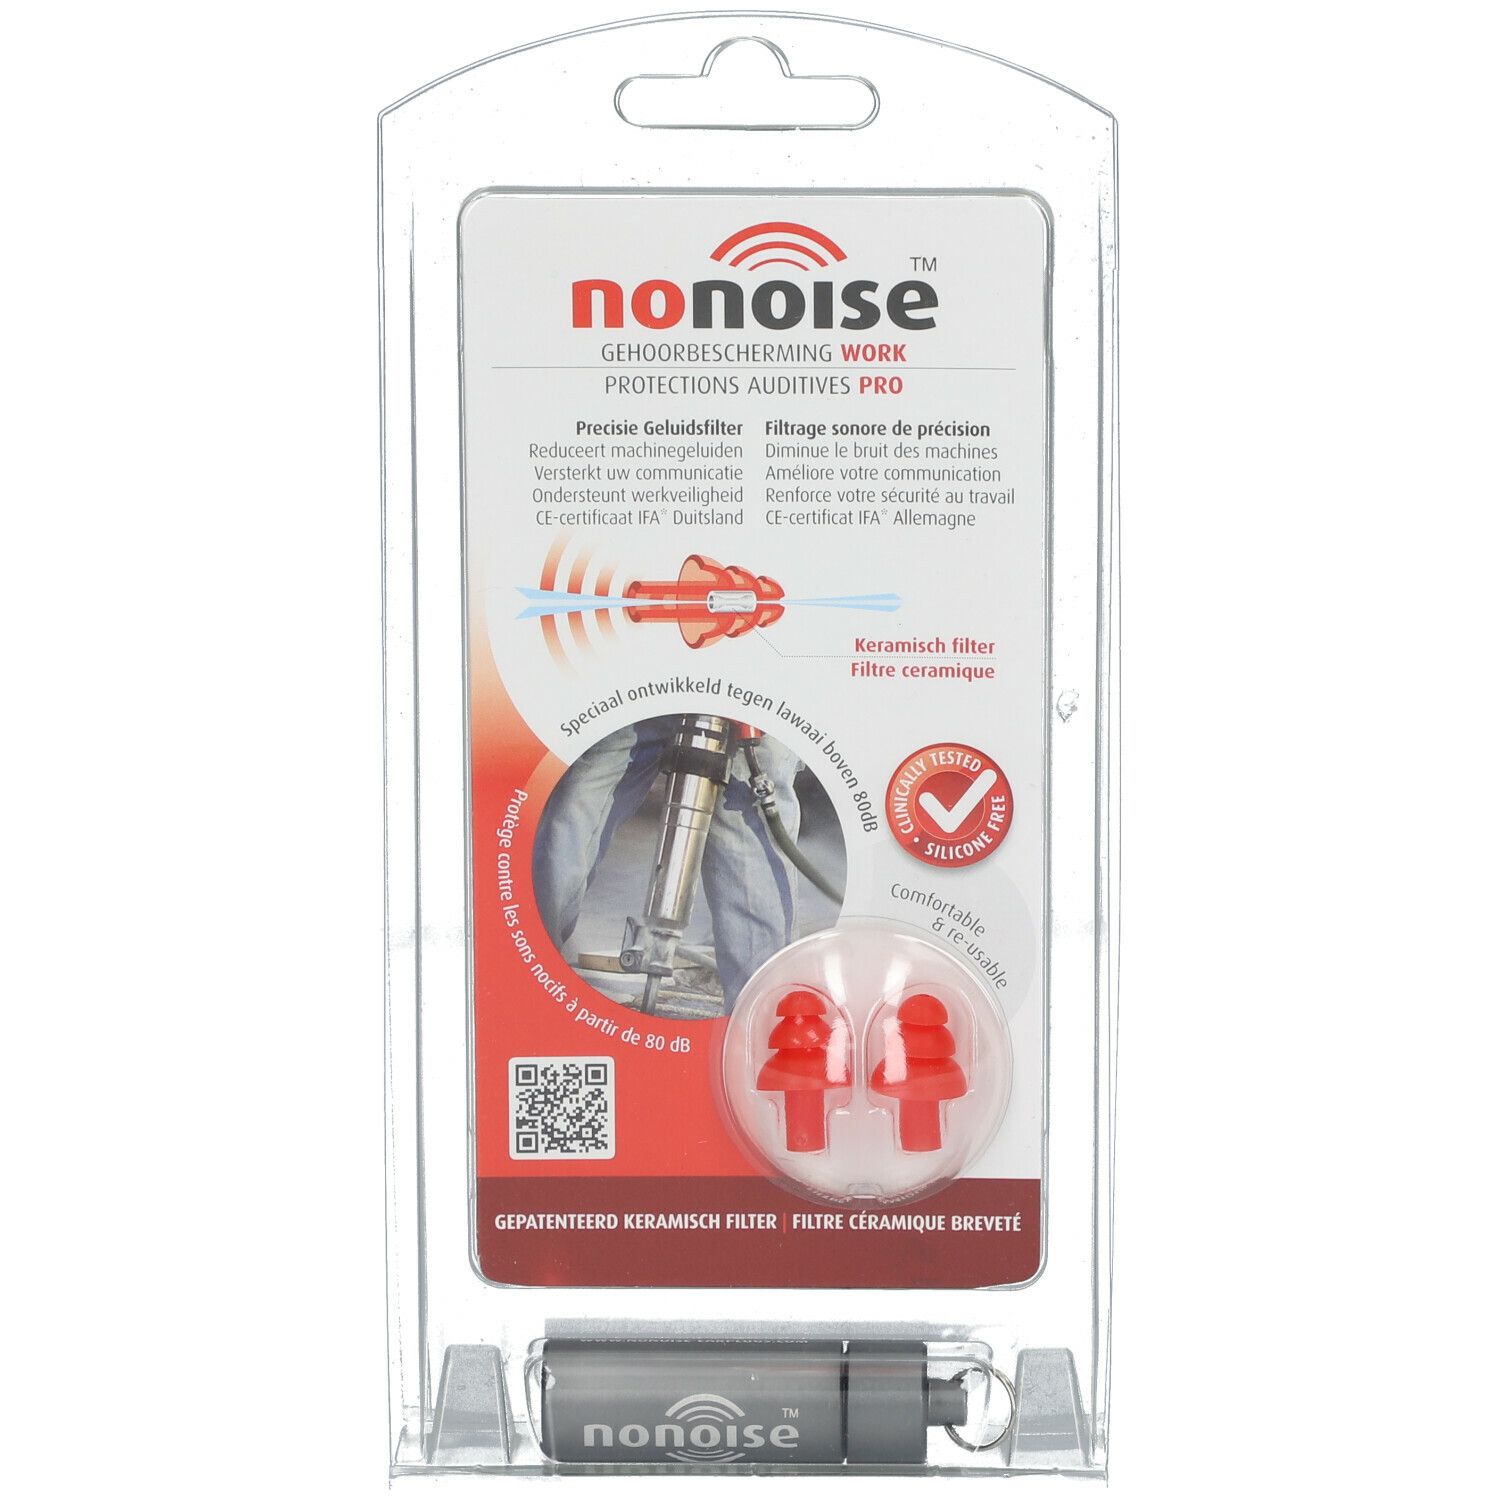 NoNoise™ Protection Auditive Pro